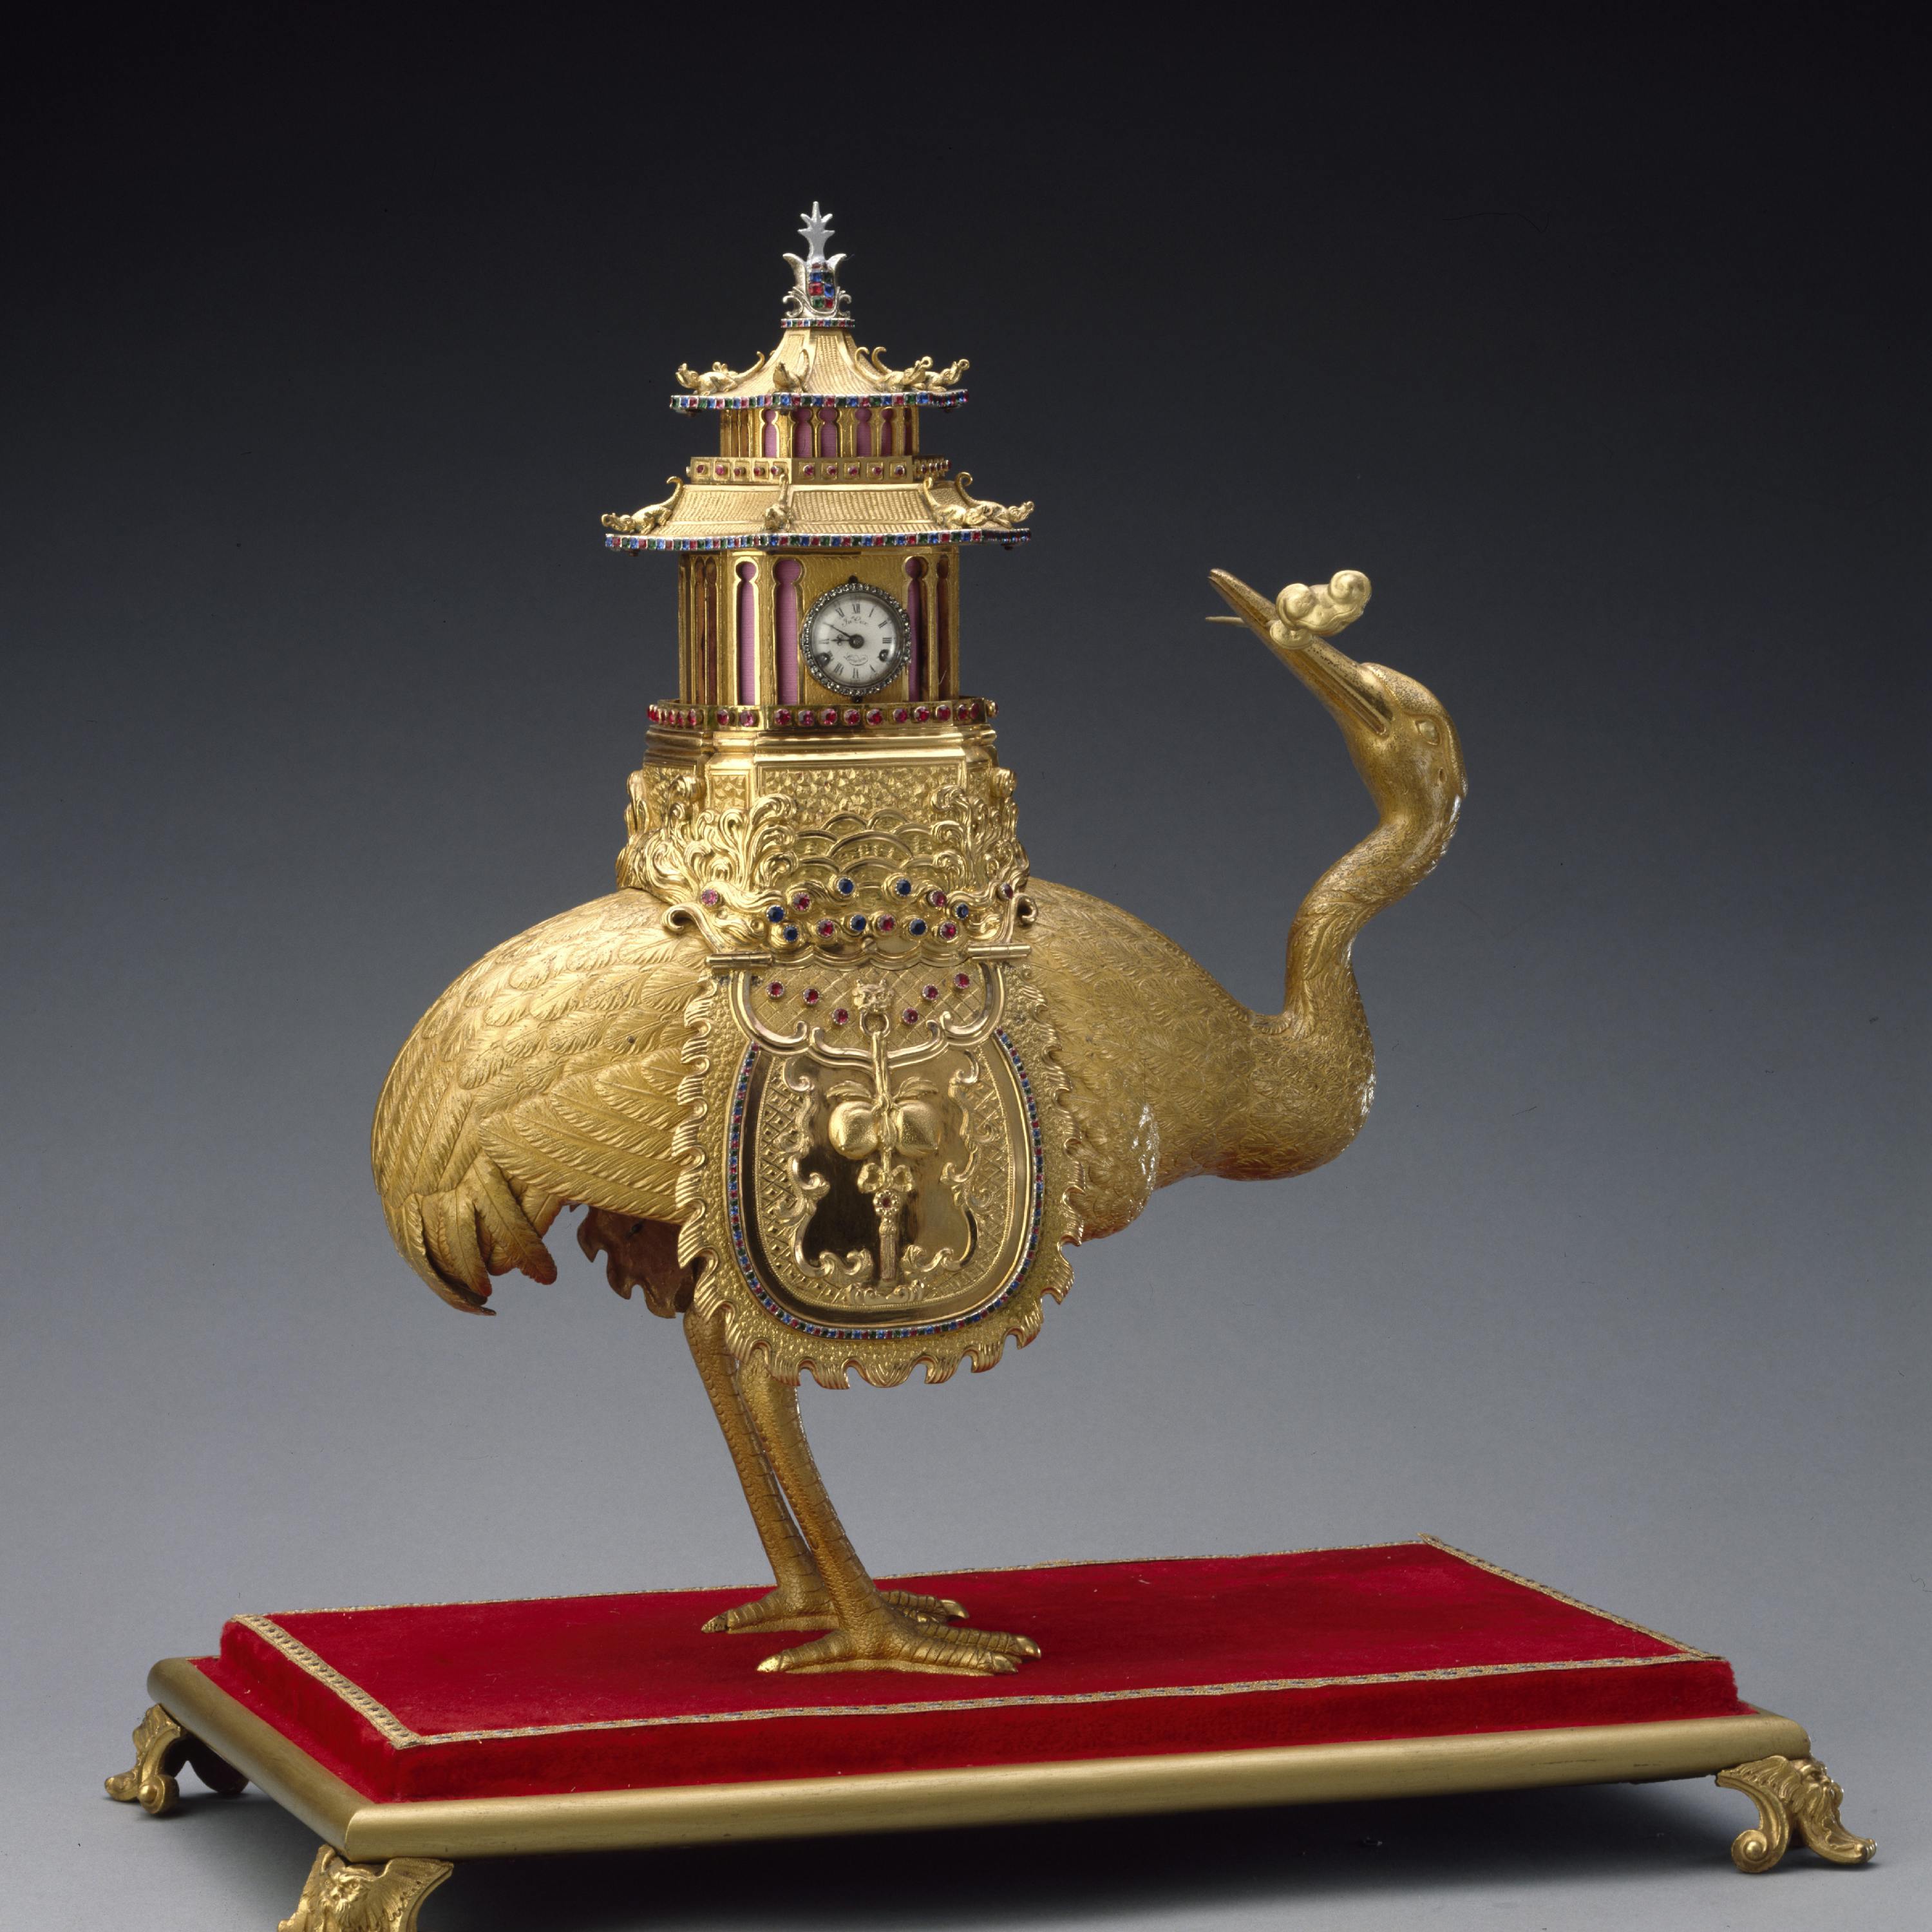 Clockwork Treasures from China's Forbidden City